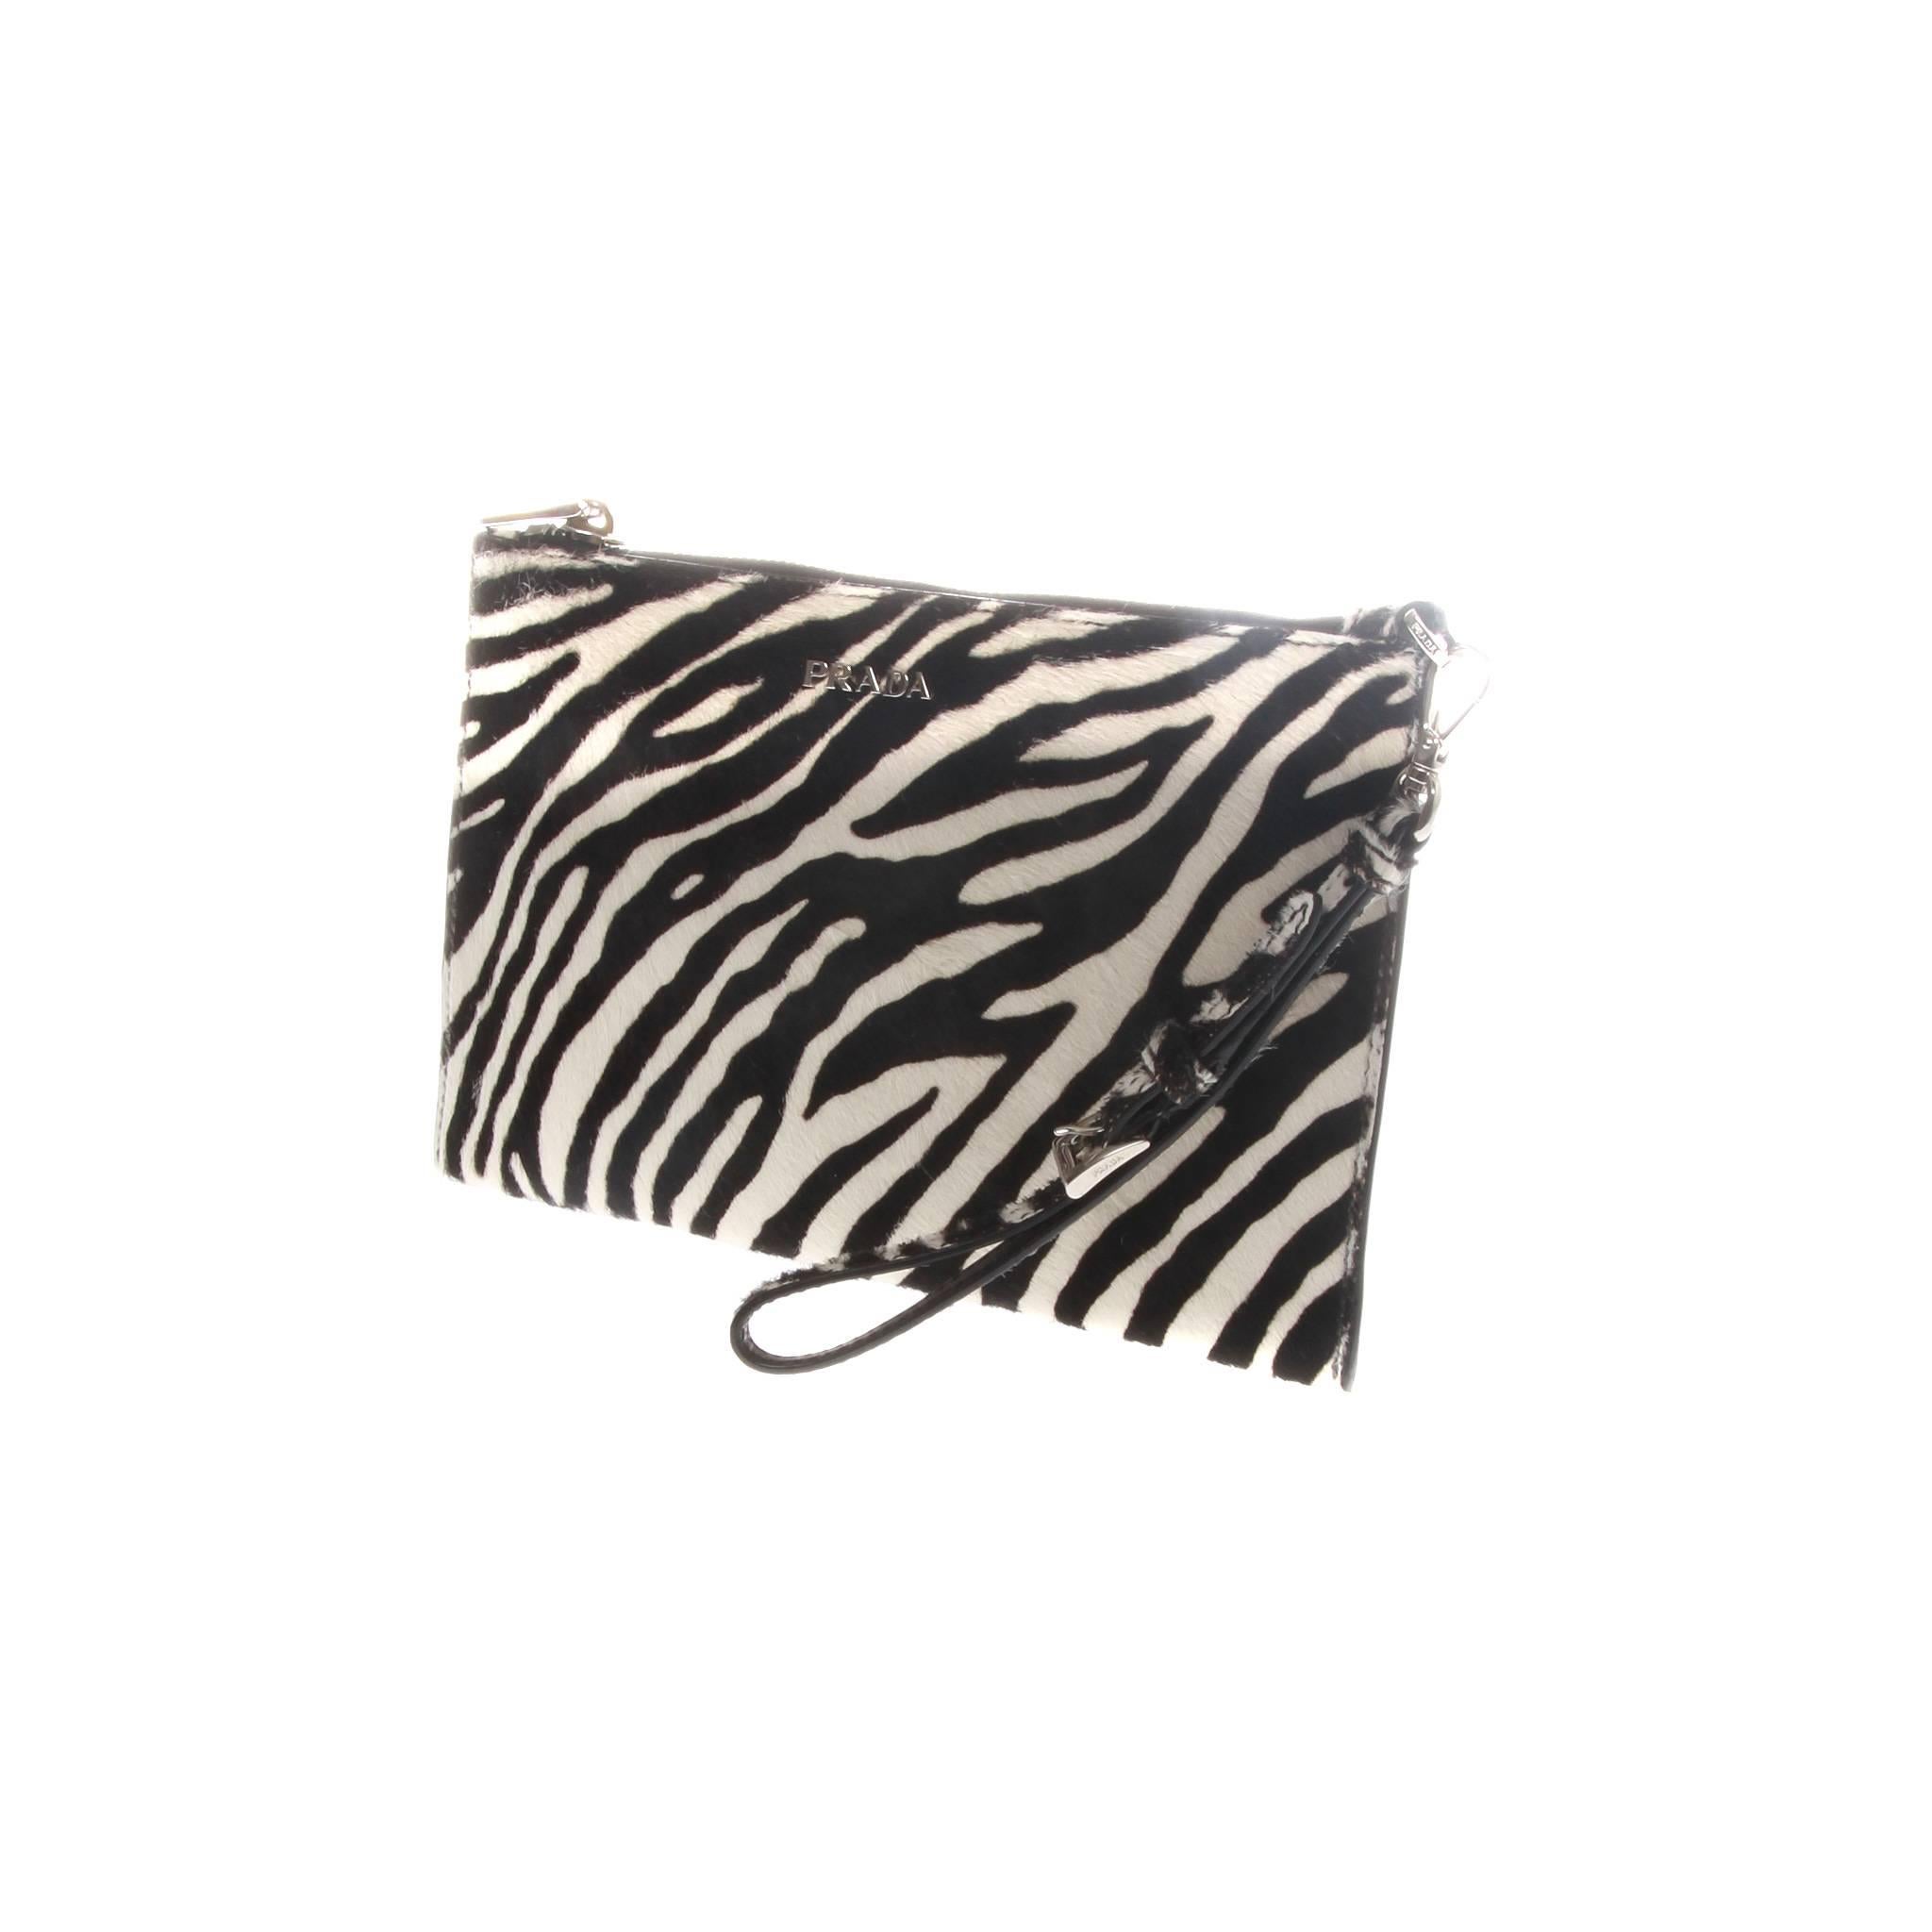 Prada zebra print pony hair pouch with silver-tone hardware and detachable wristlet strap. 